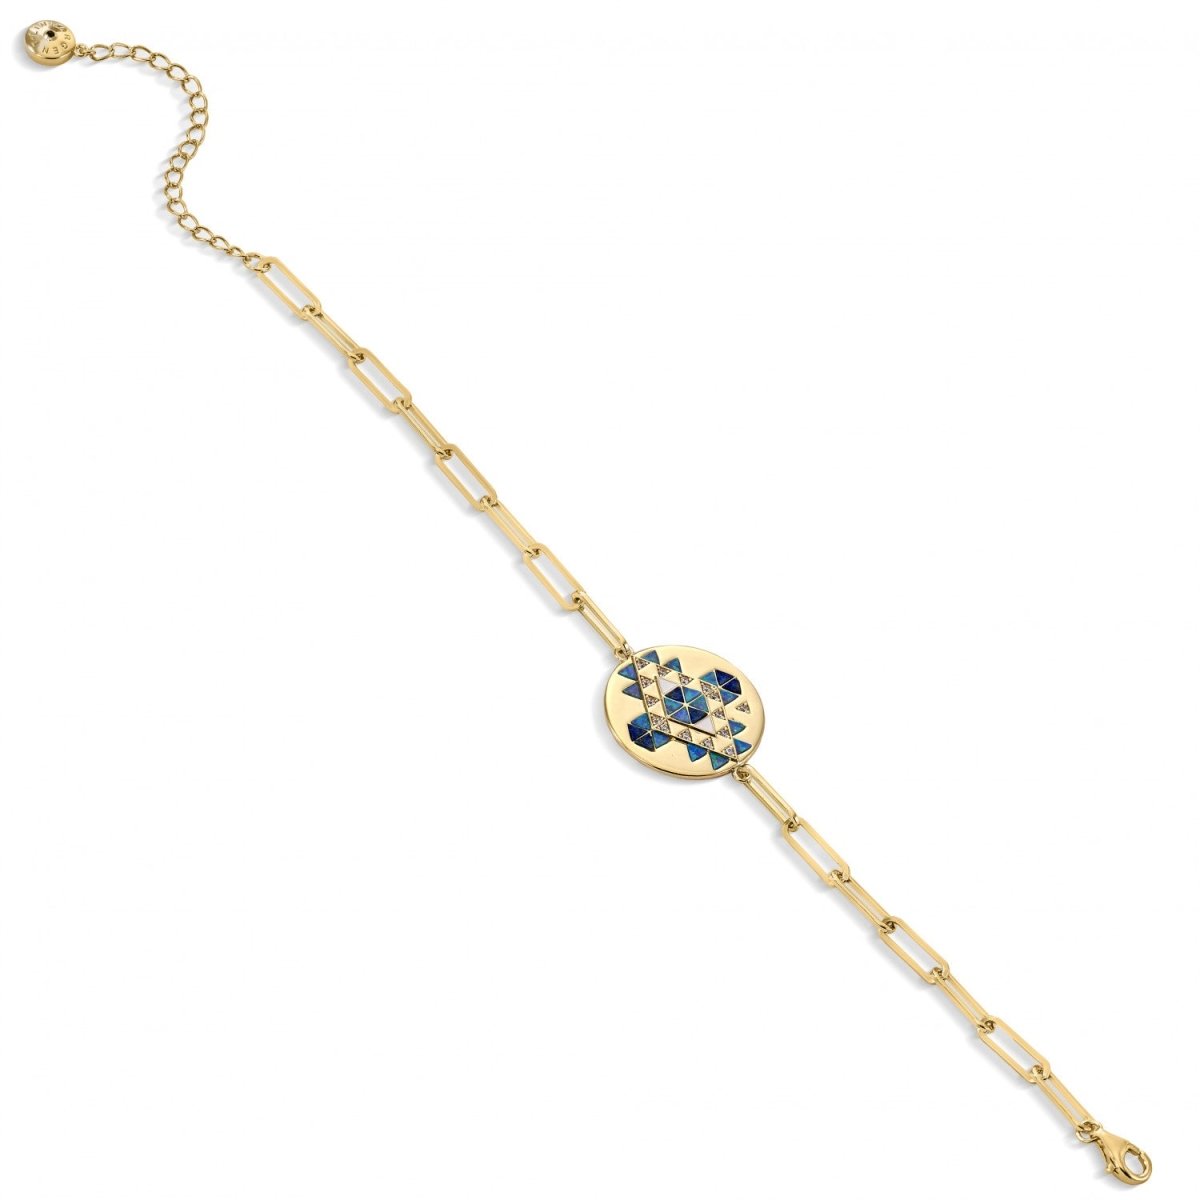 Bracelet - Silver link bracelet paperclip design round motif with white enamel lapis lazuli and zirconias